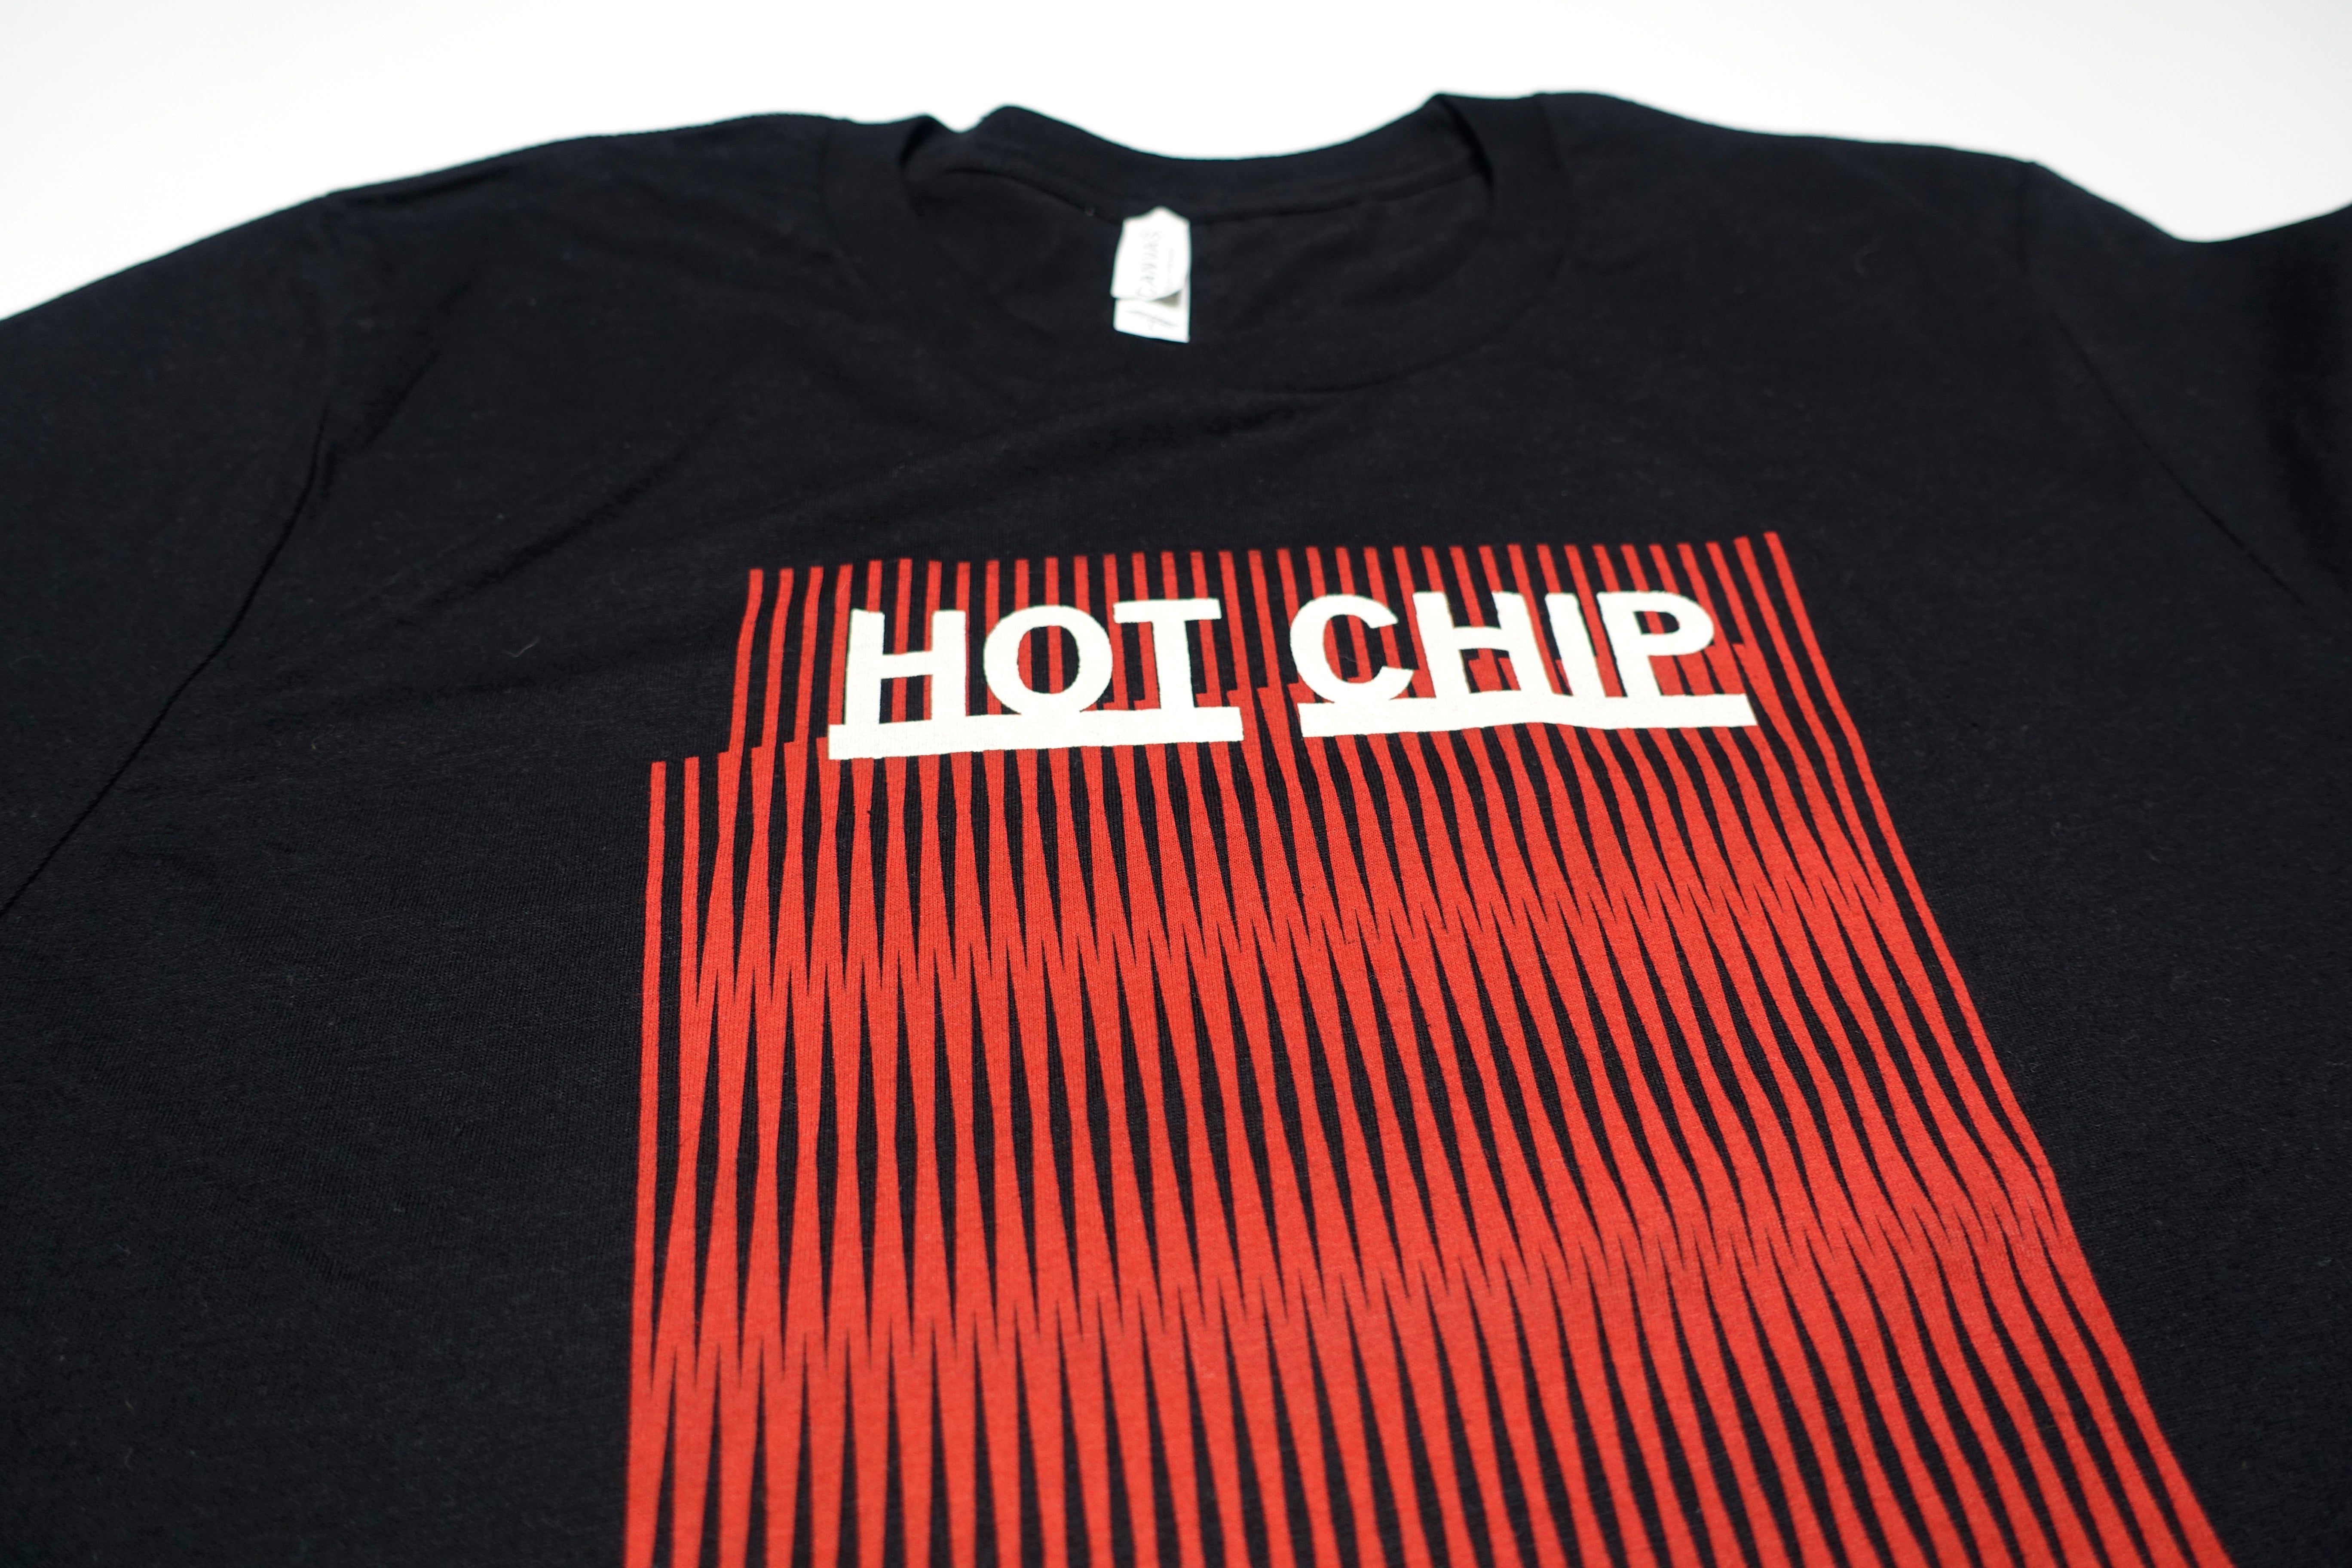 Hot Chip - Why Make Sense? 2015 Tour Shirt (Black) Size Large